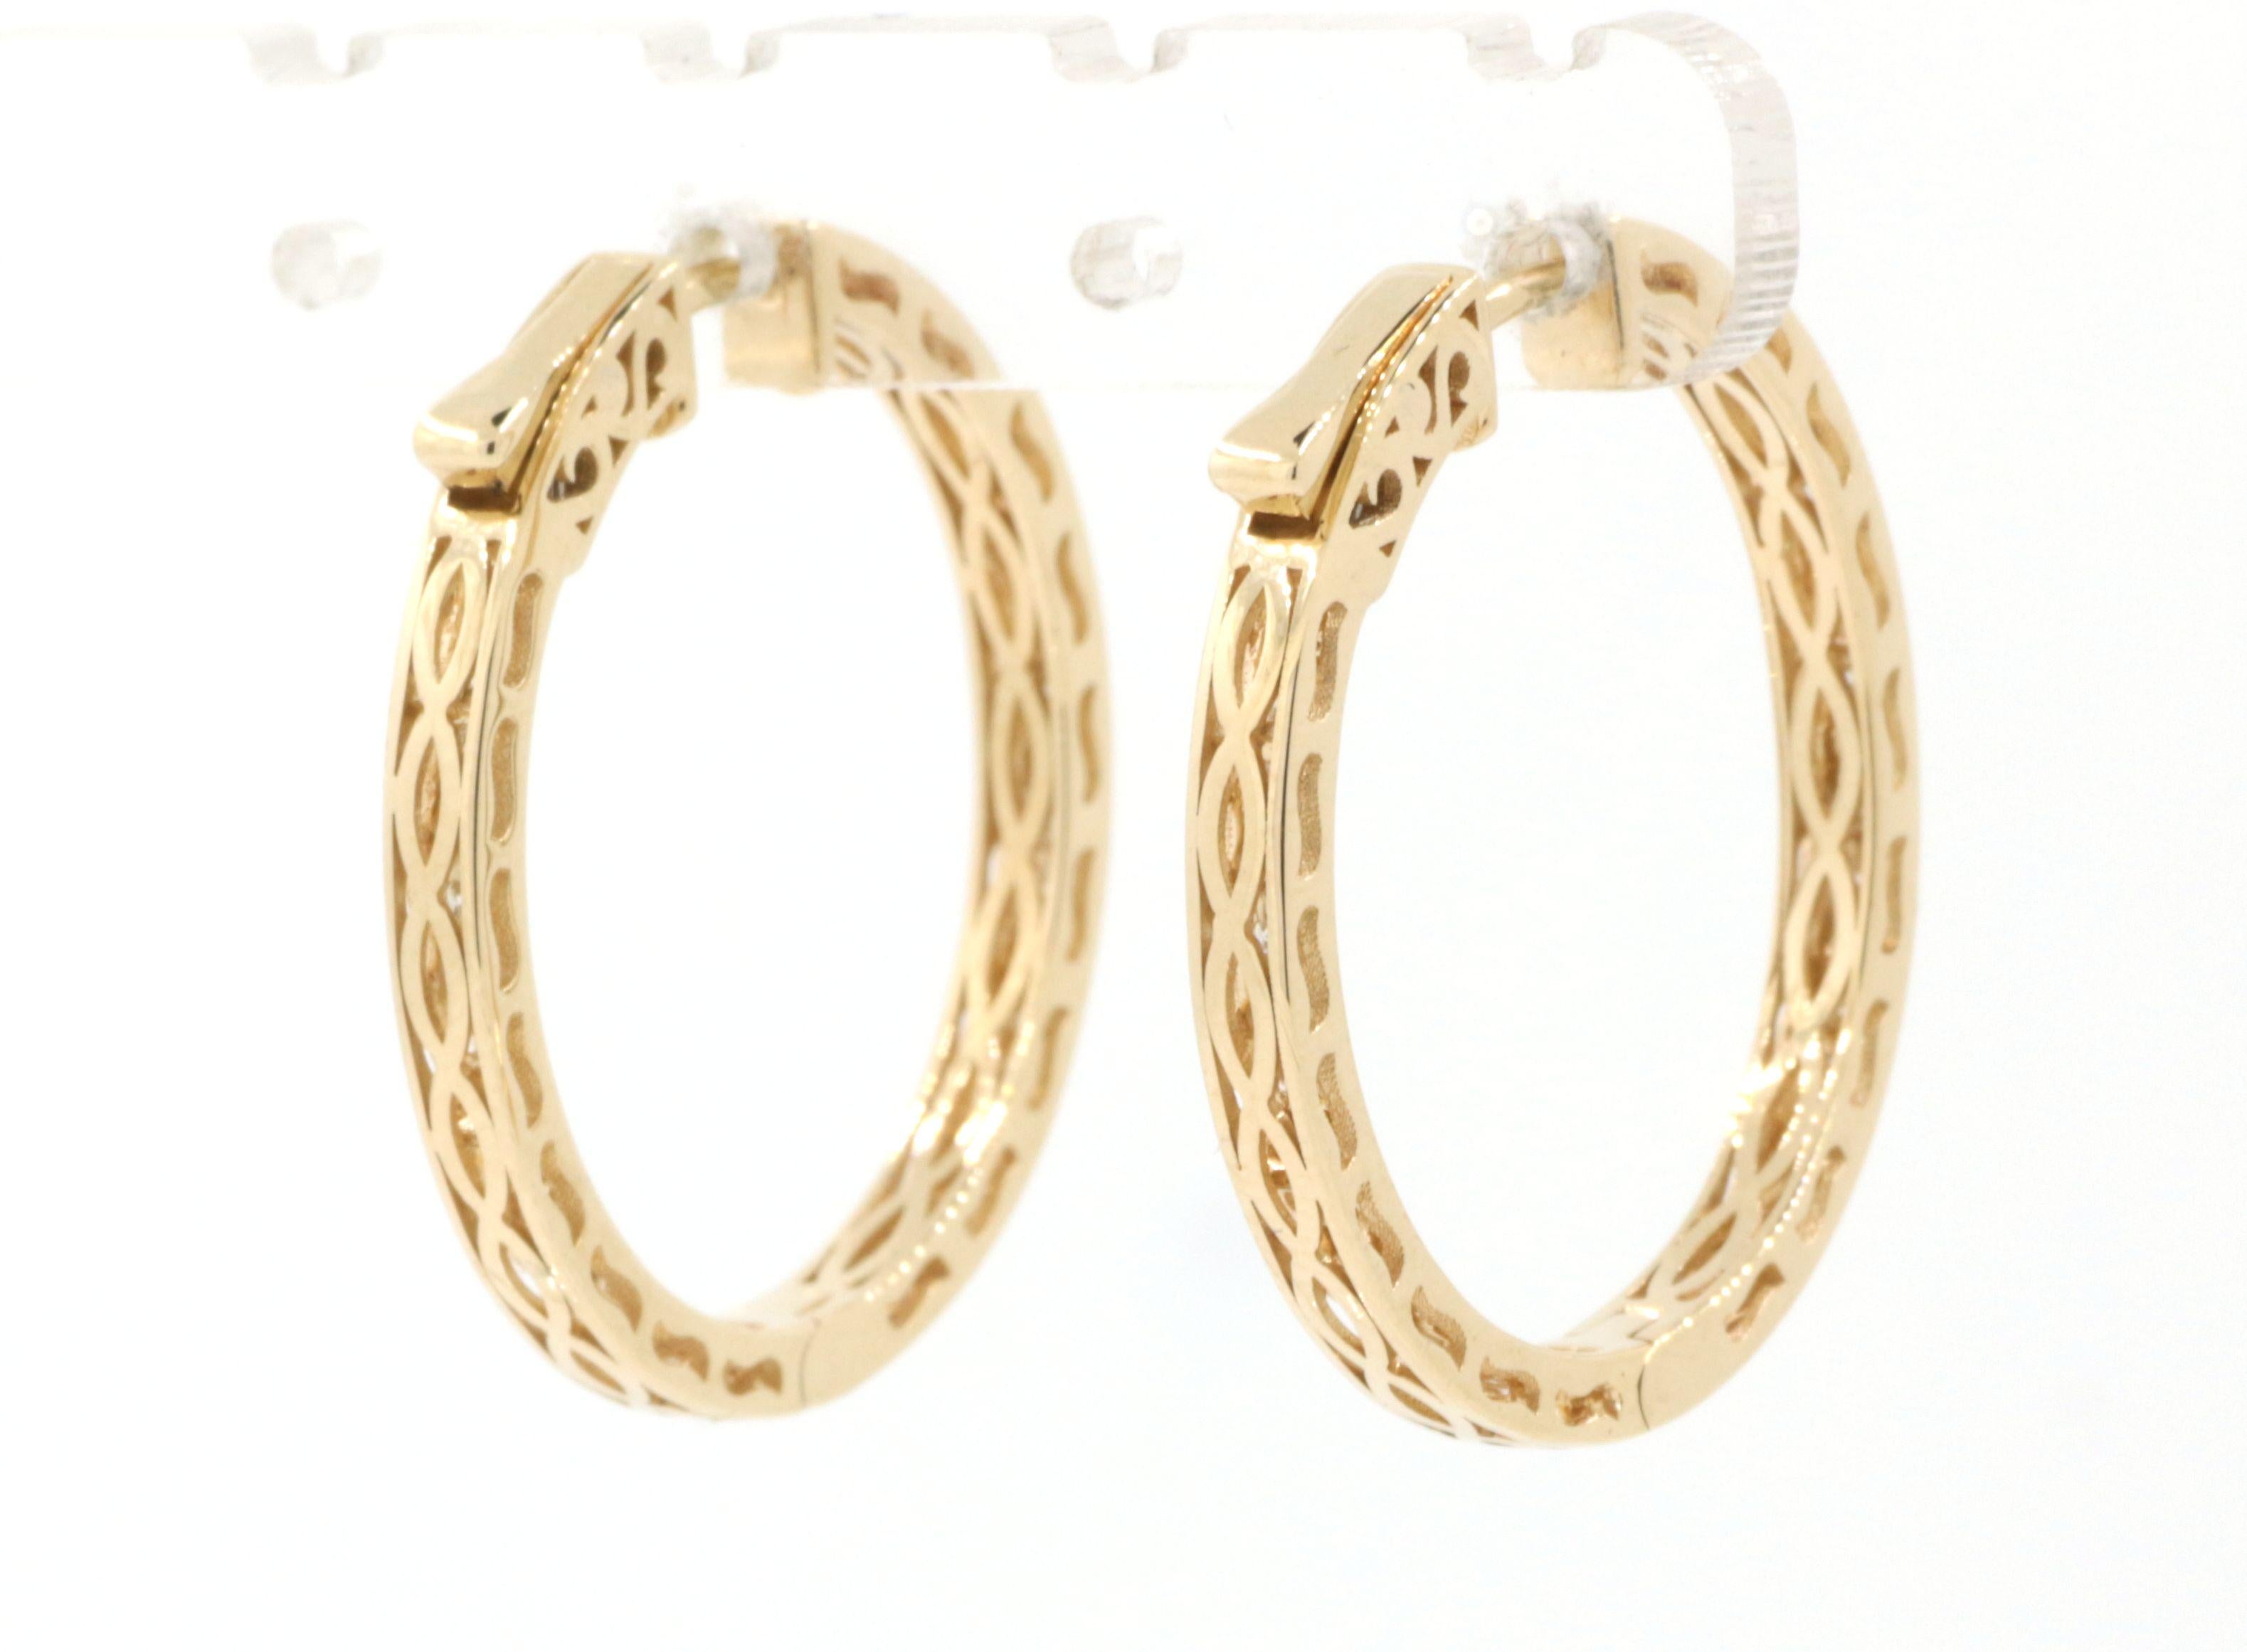 Contemporary 0.75 Carat Diamond Hoop Earrings in 14 Karat Yellow Gold